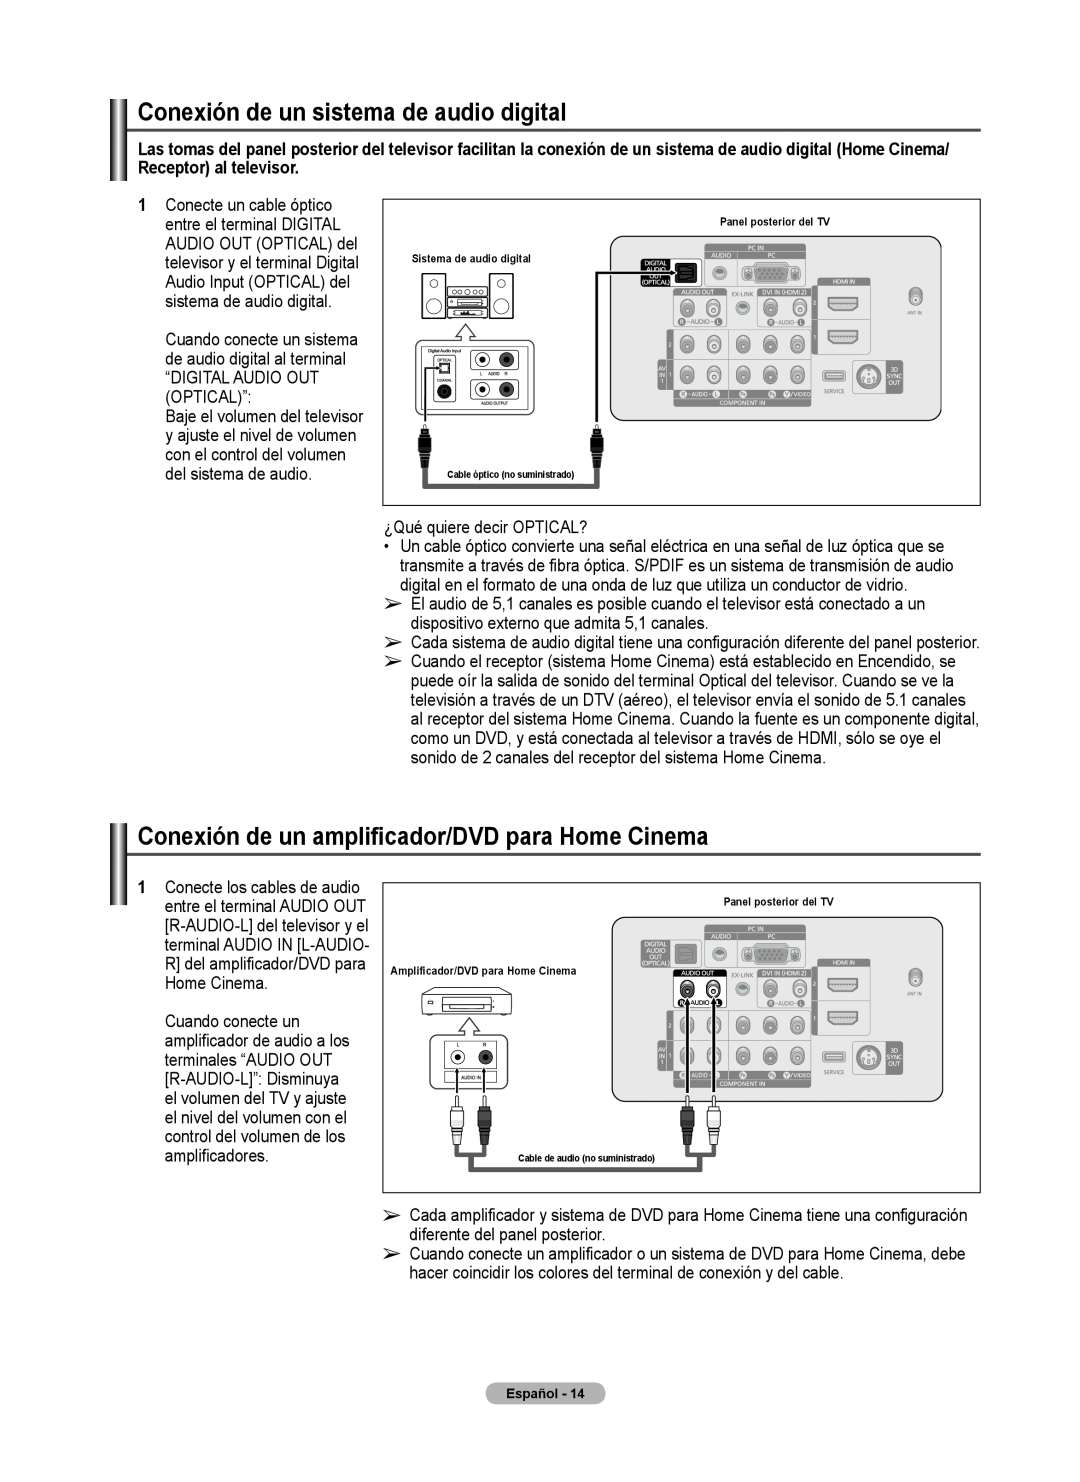 Samsung 460 user manual Conexión de un sistema de audio digital, Conexión de un amplificador/DVD para Home Cinema 